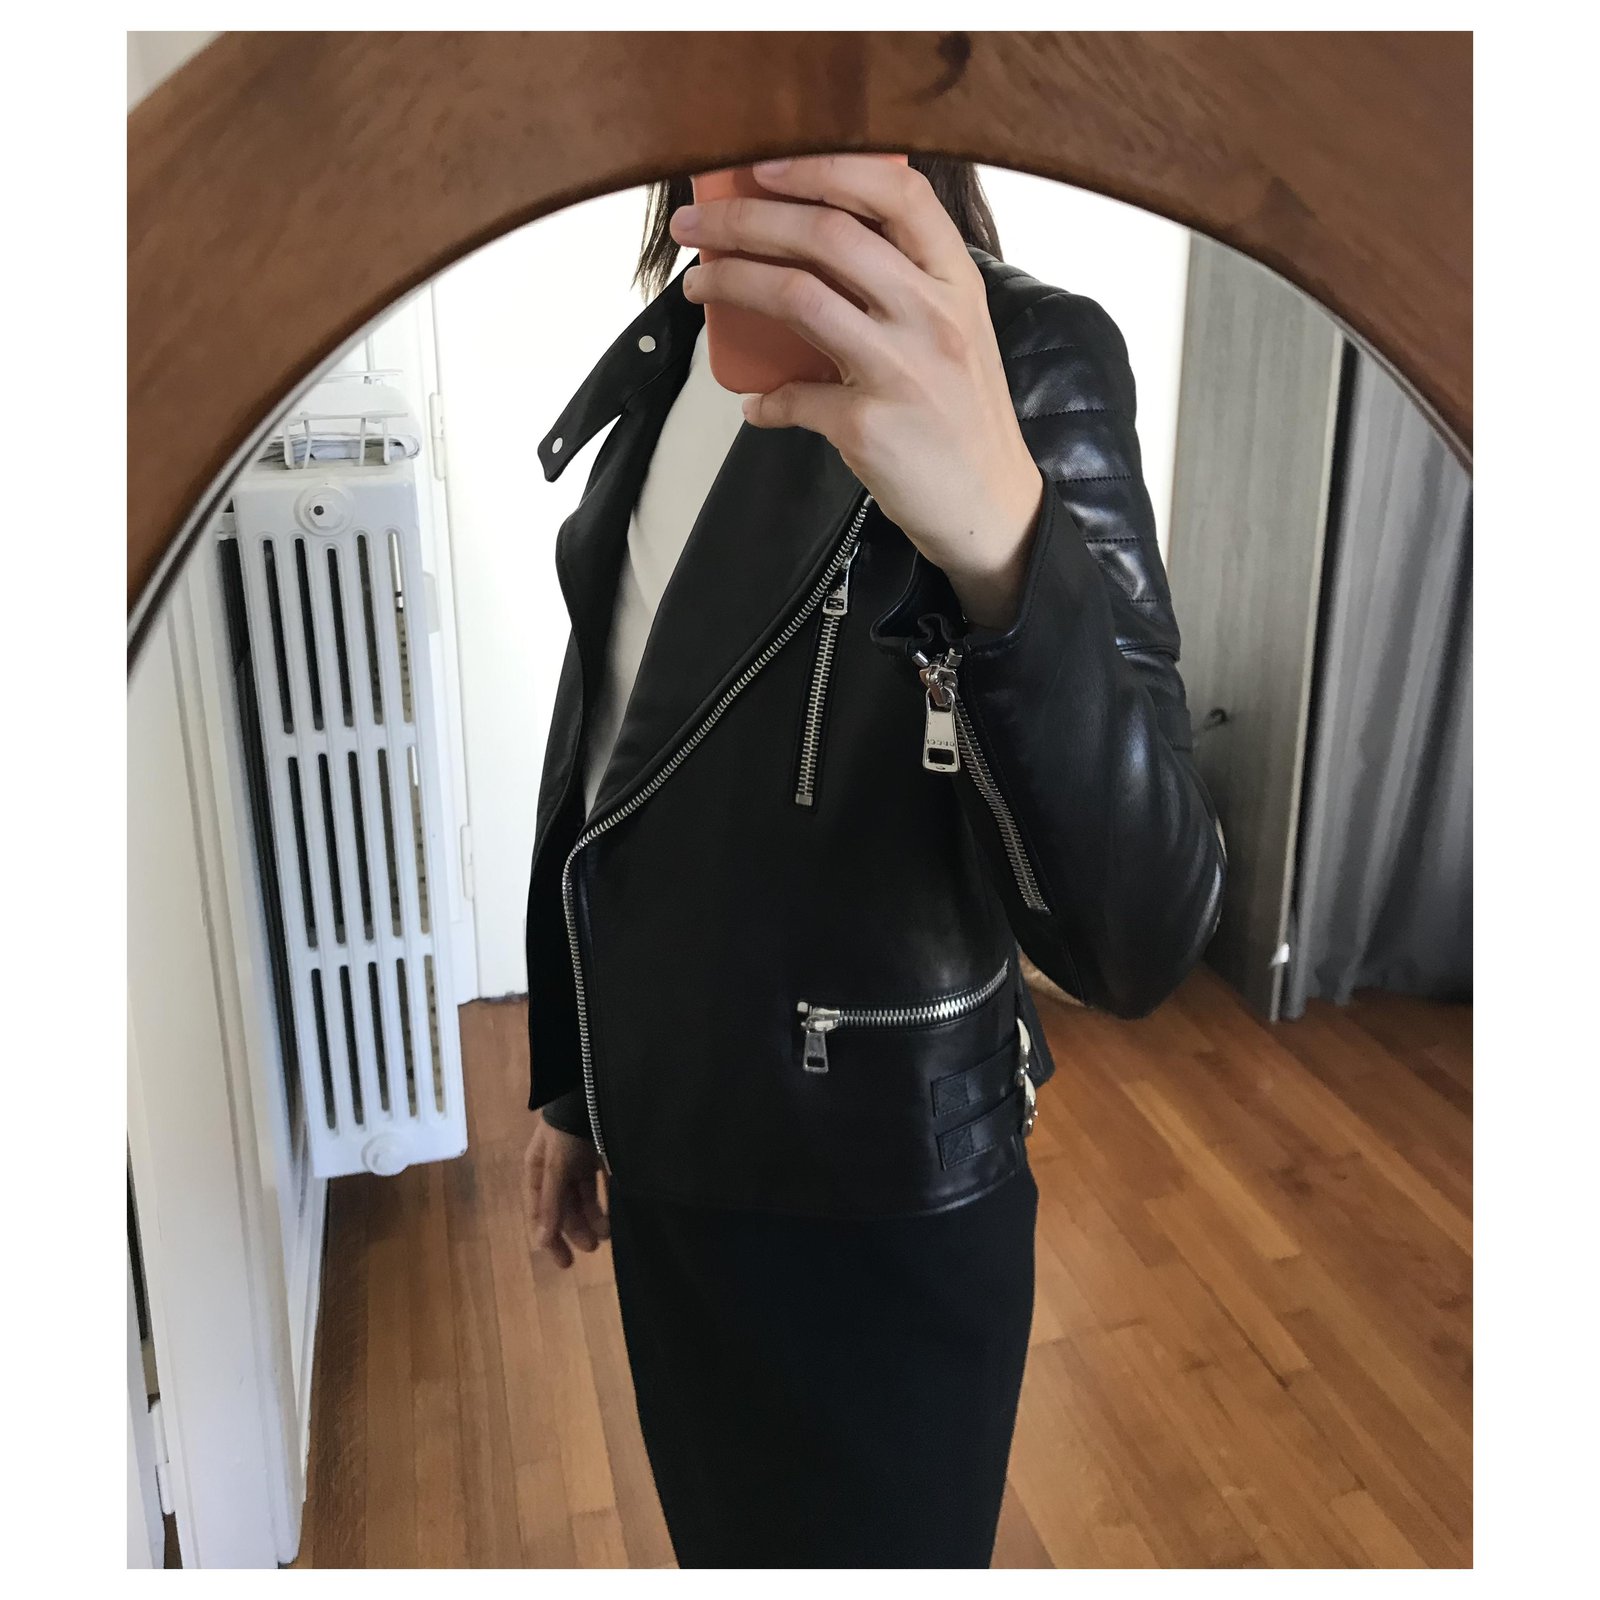 GUCCI Leather biker jacket